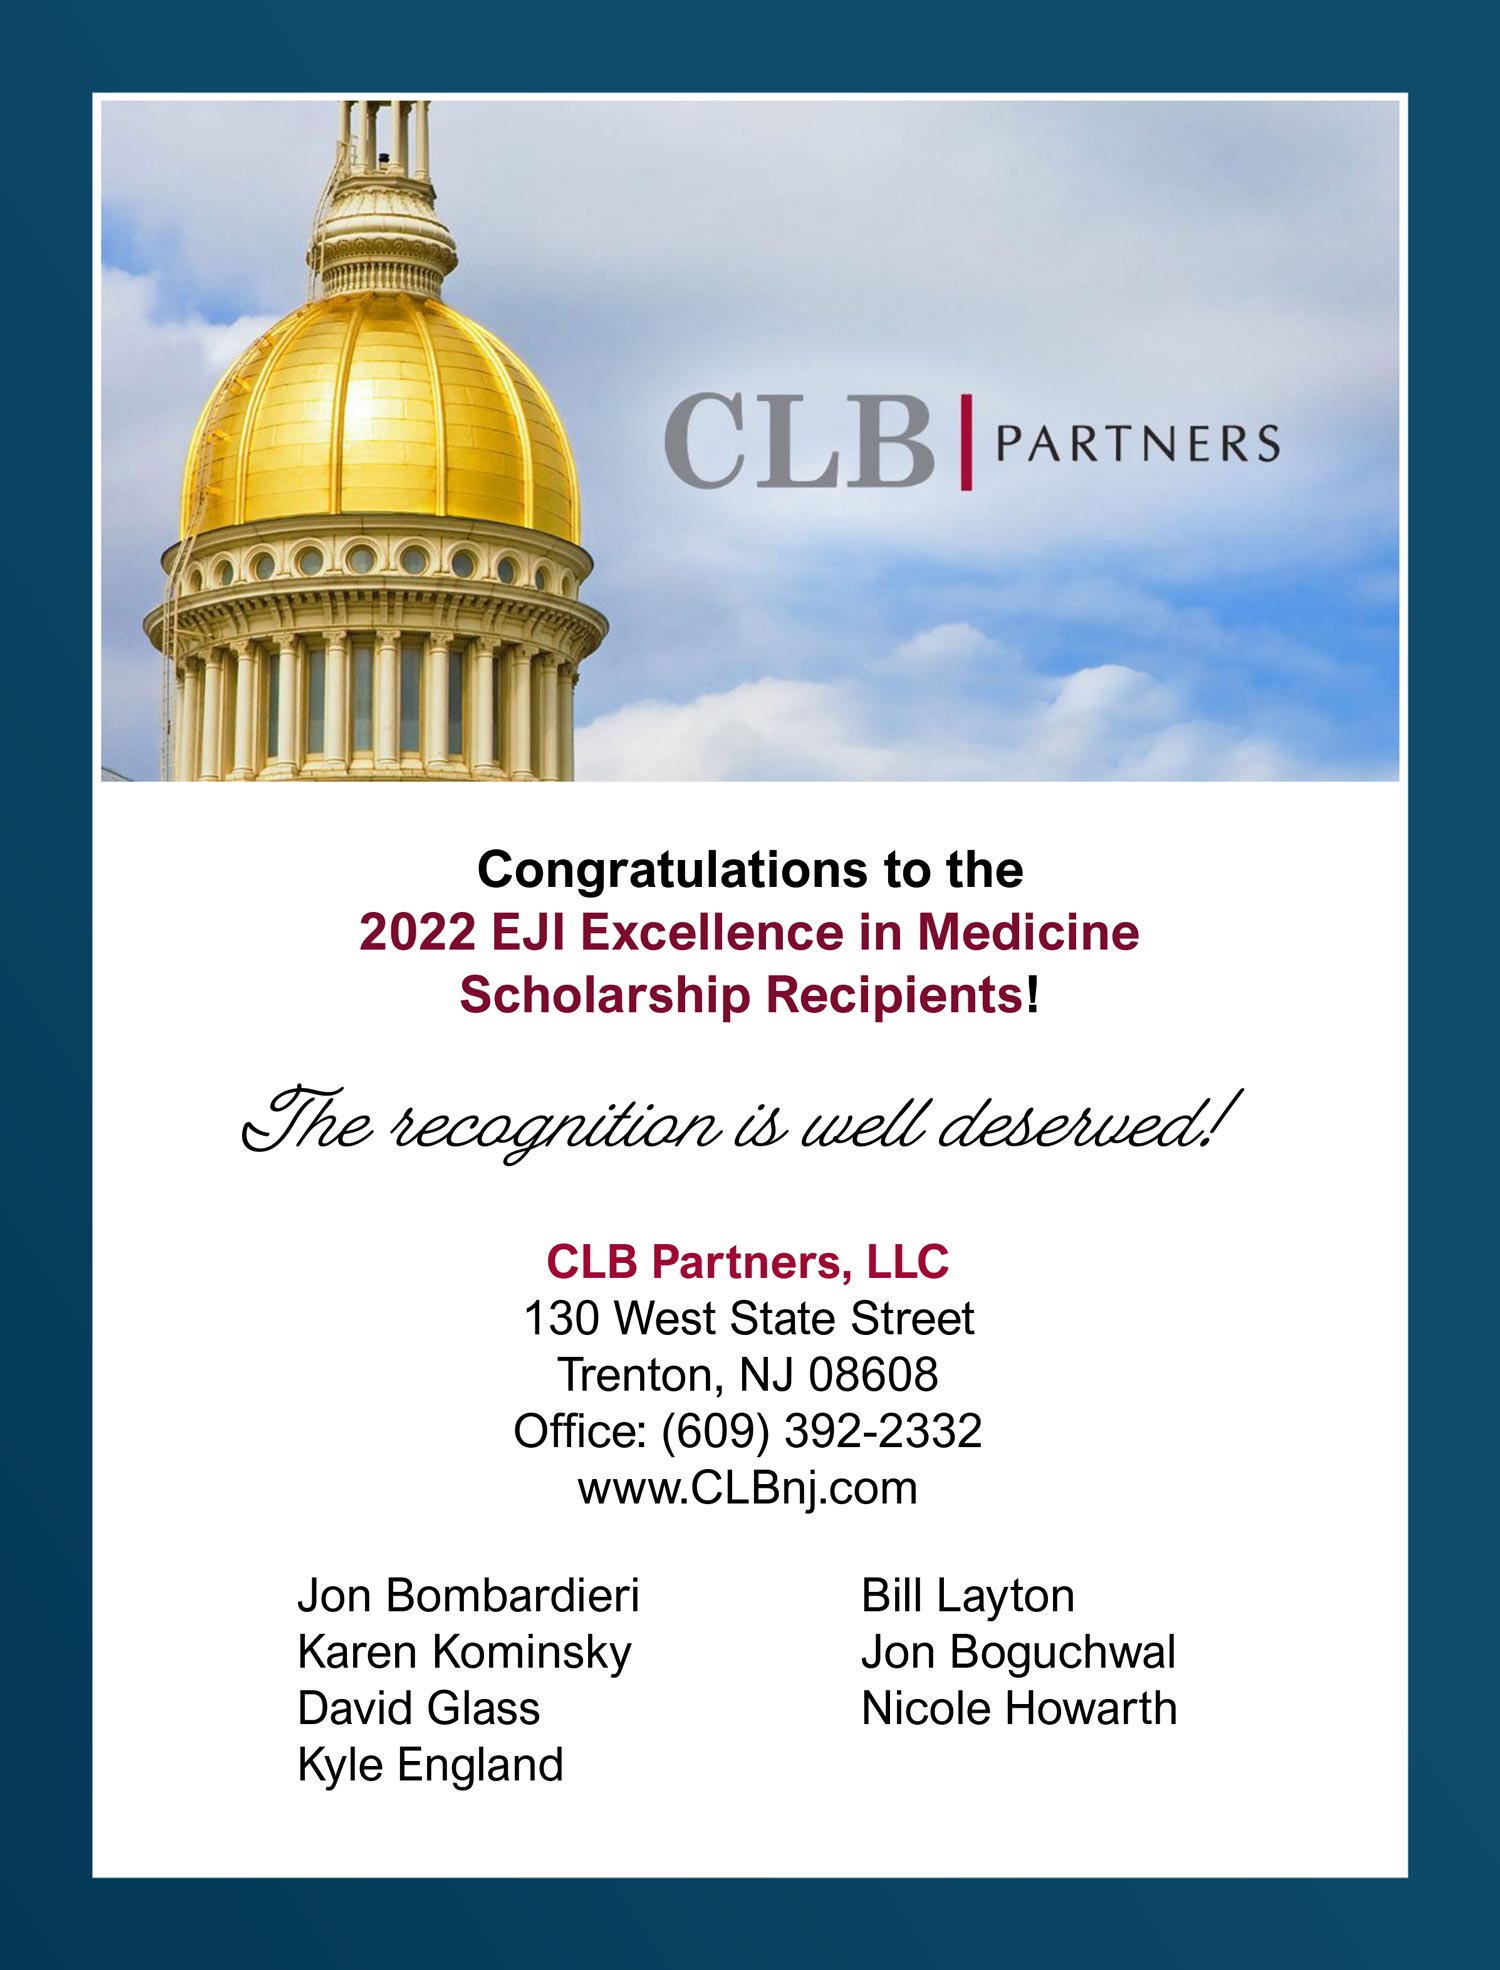 CLB Partners, LLC advertisement